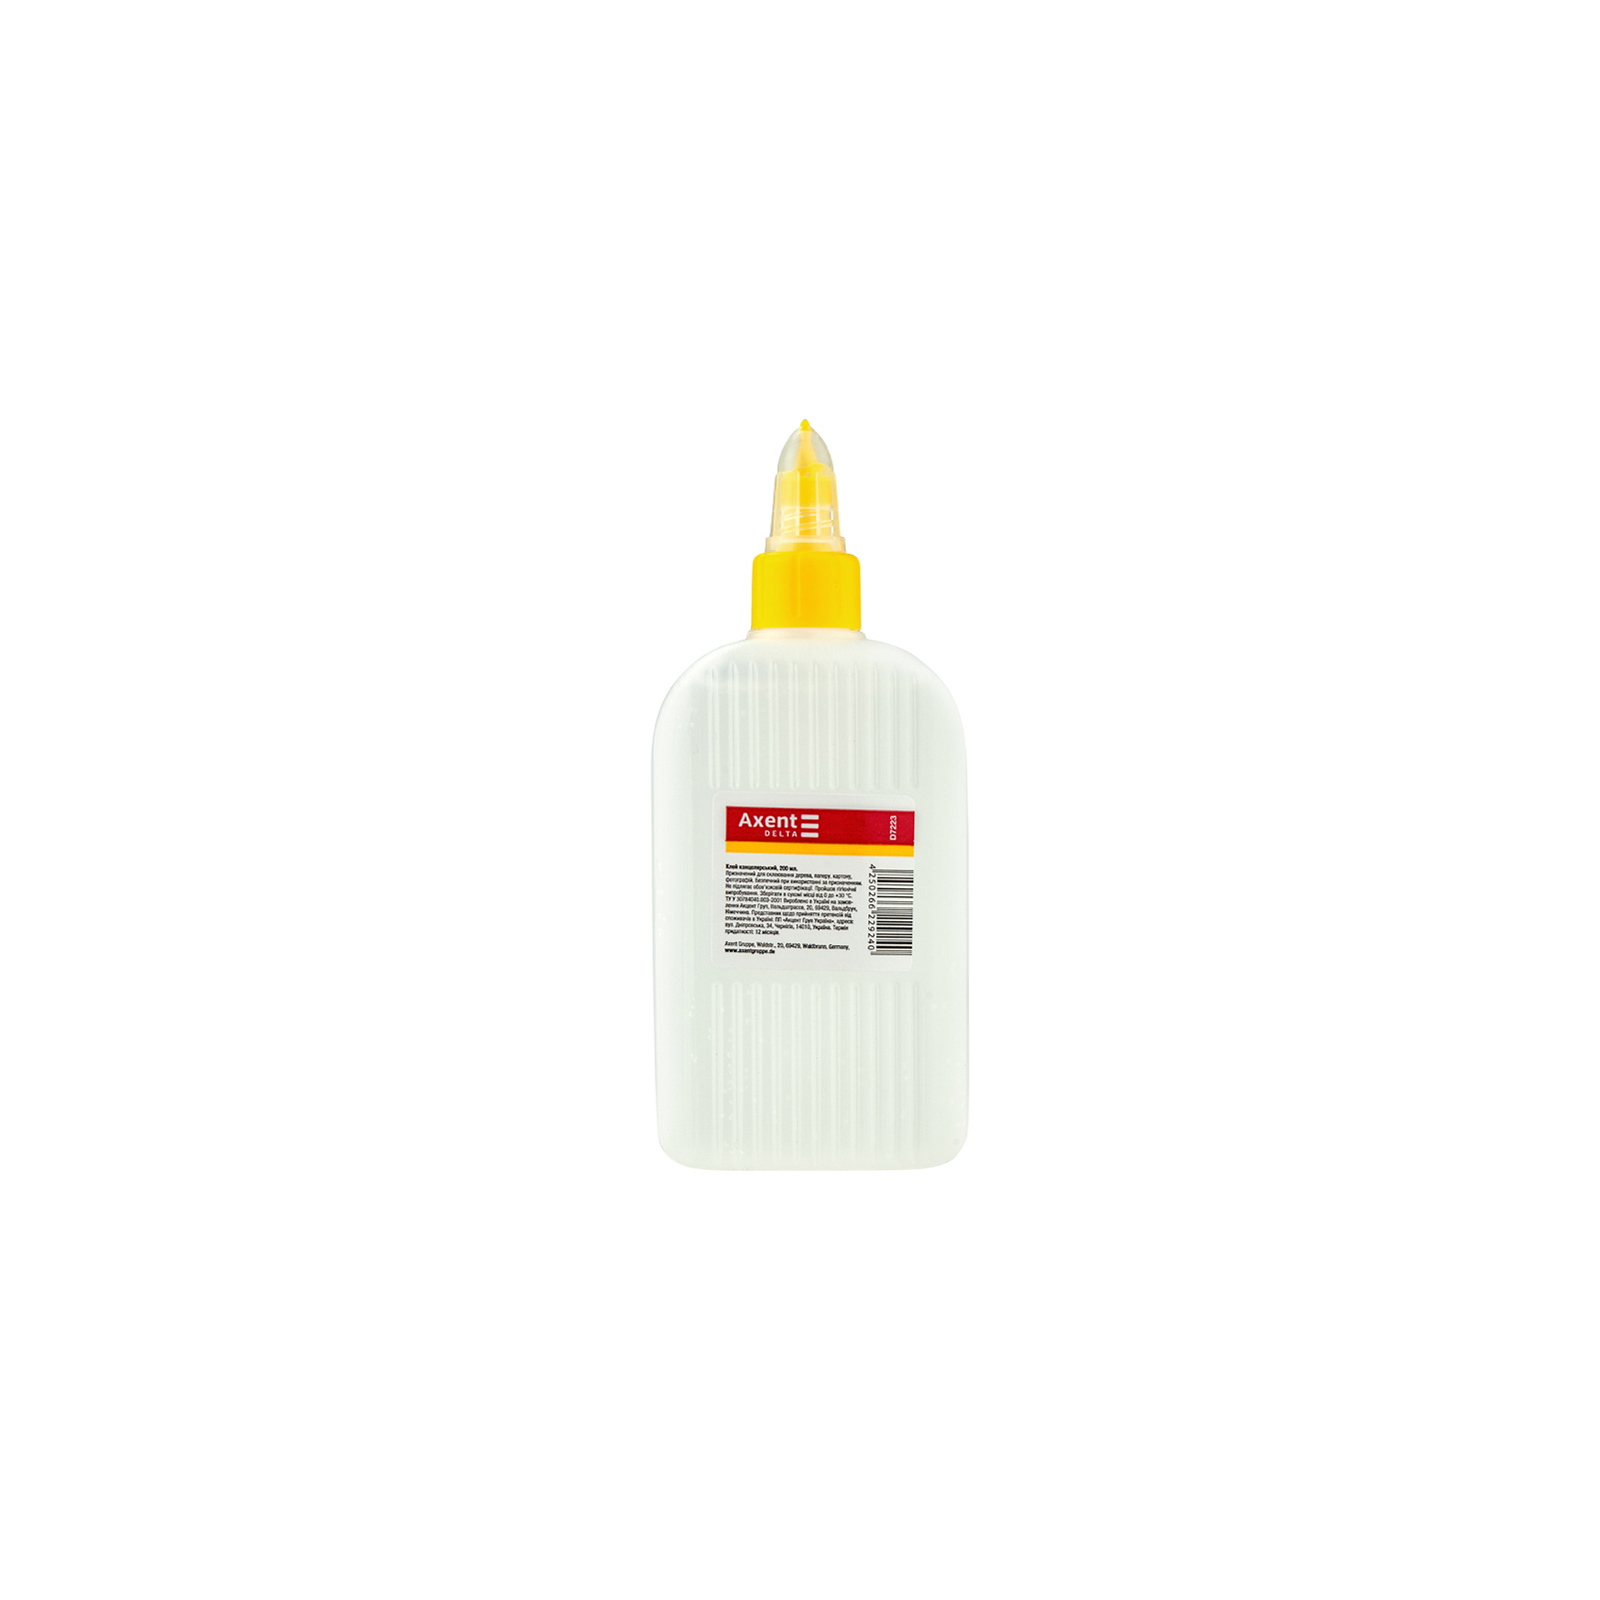 Клей Delta by Axent Stationery glue, polymer, 200 мл, cap dispenser (D7223)